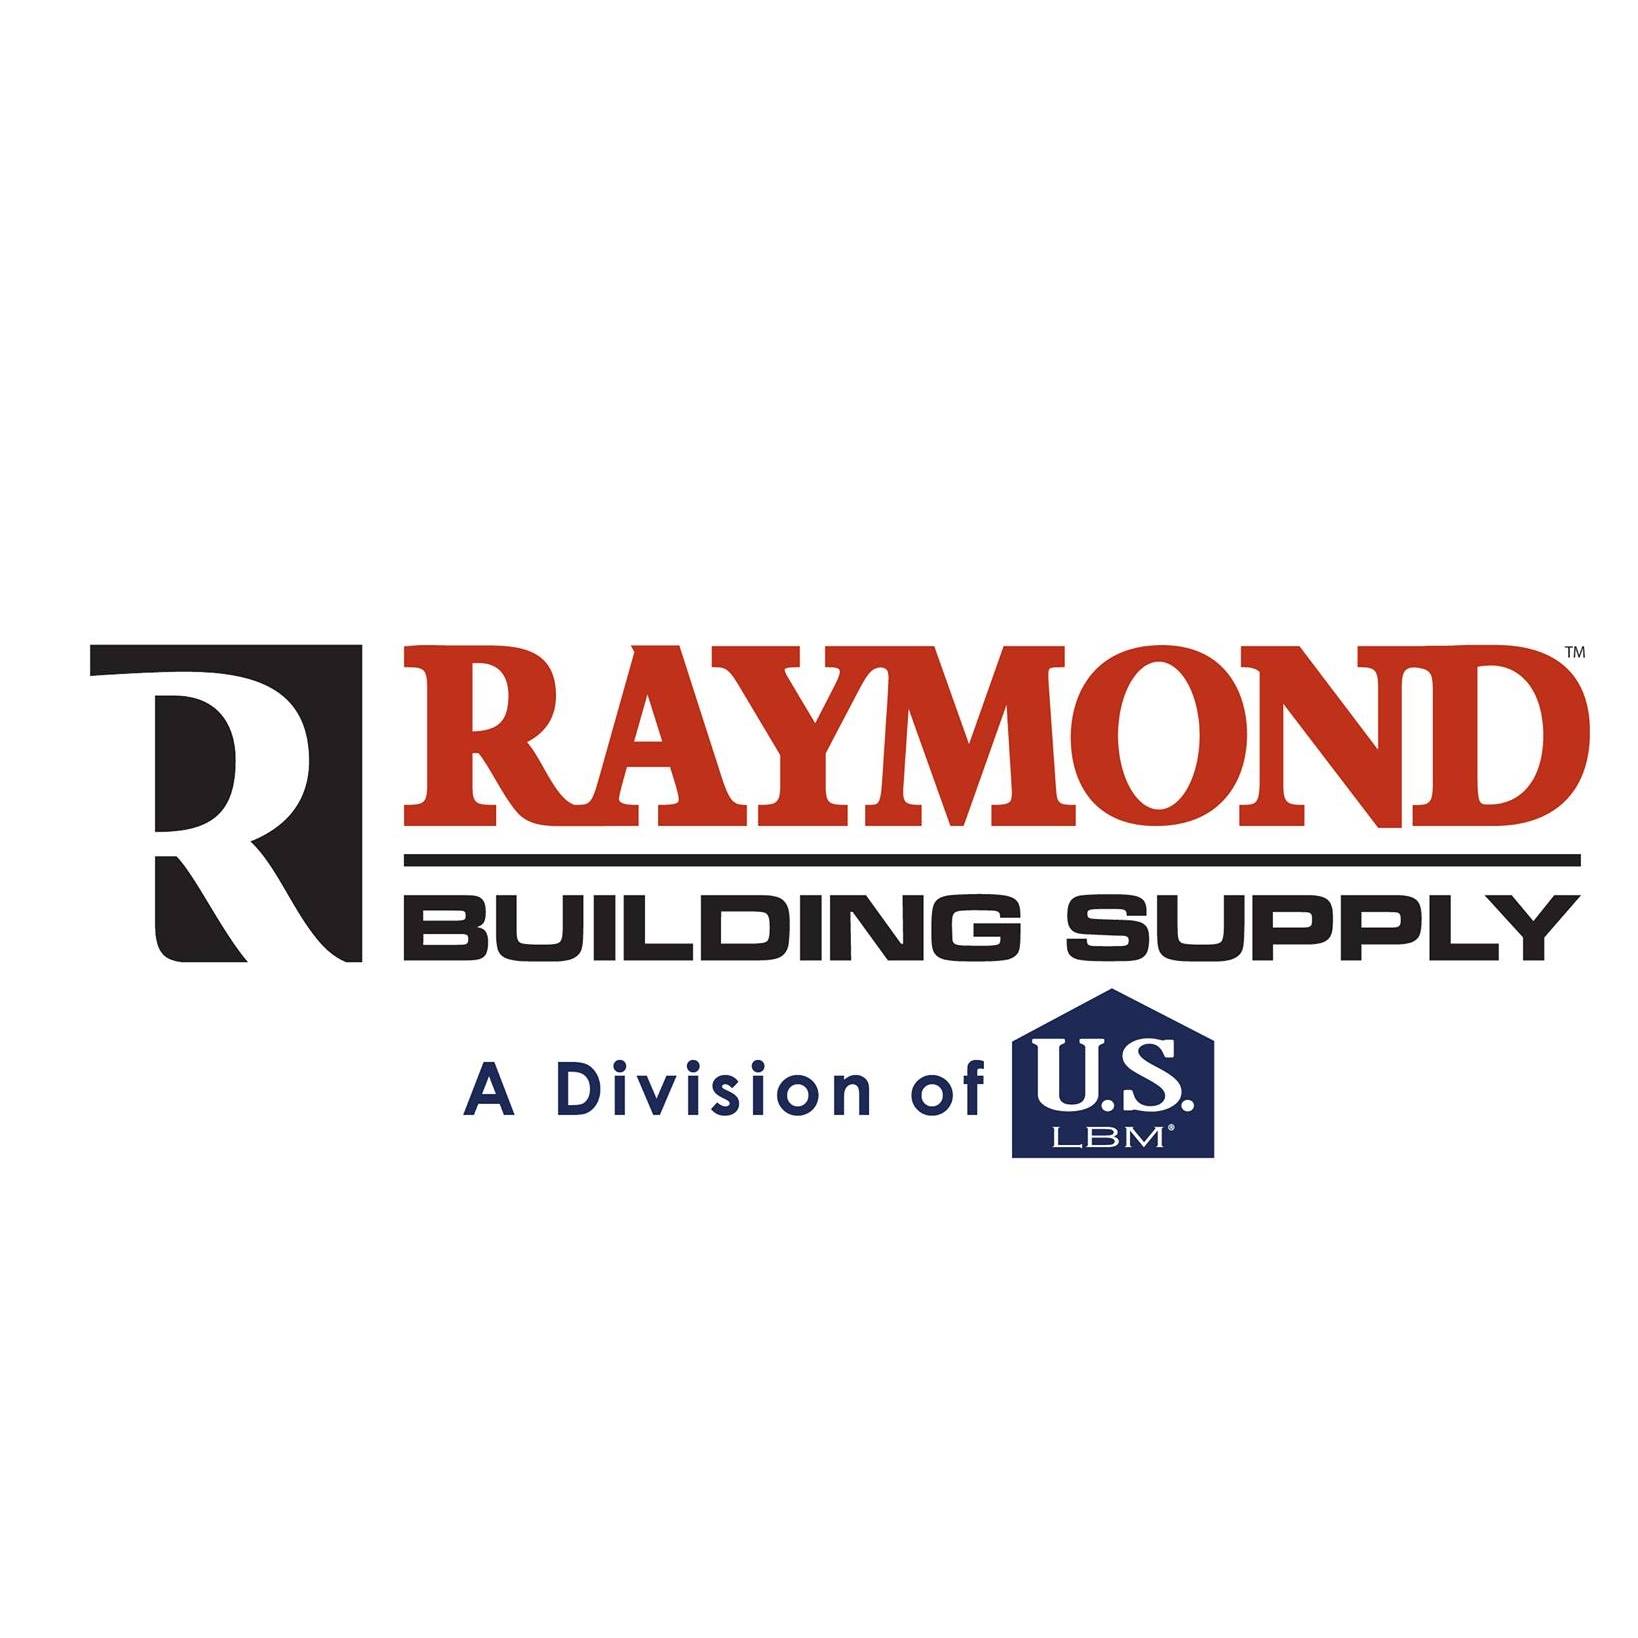 Raymond Building Supply